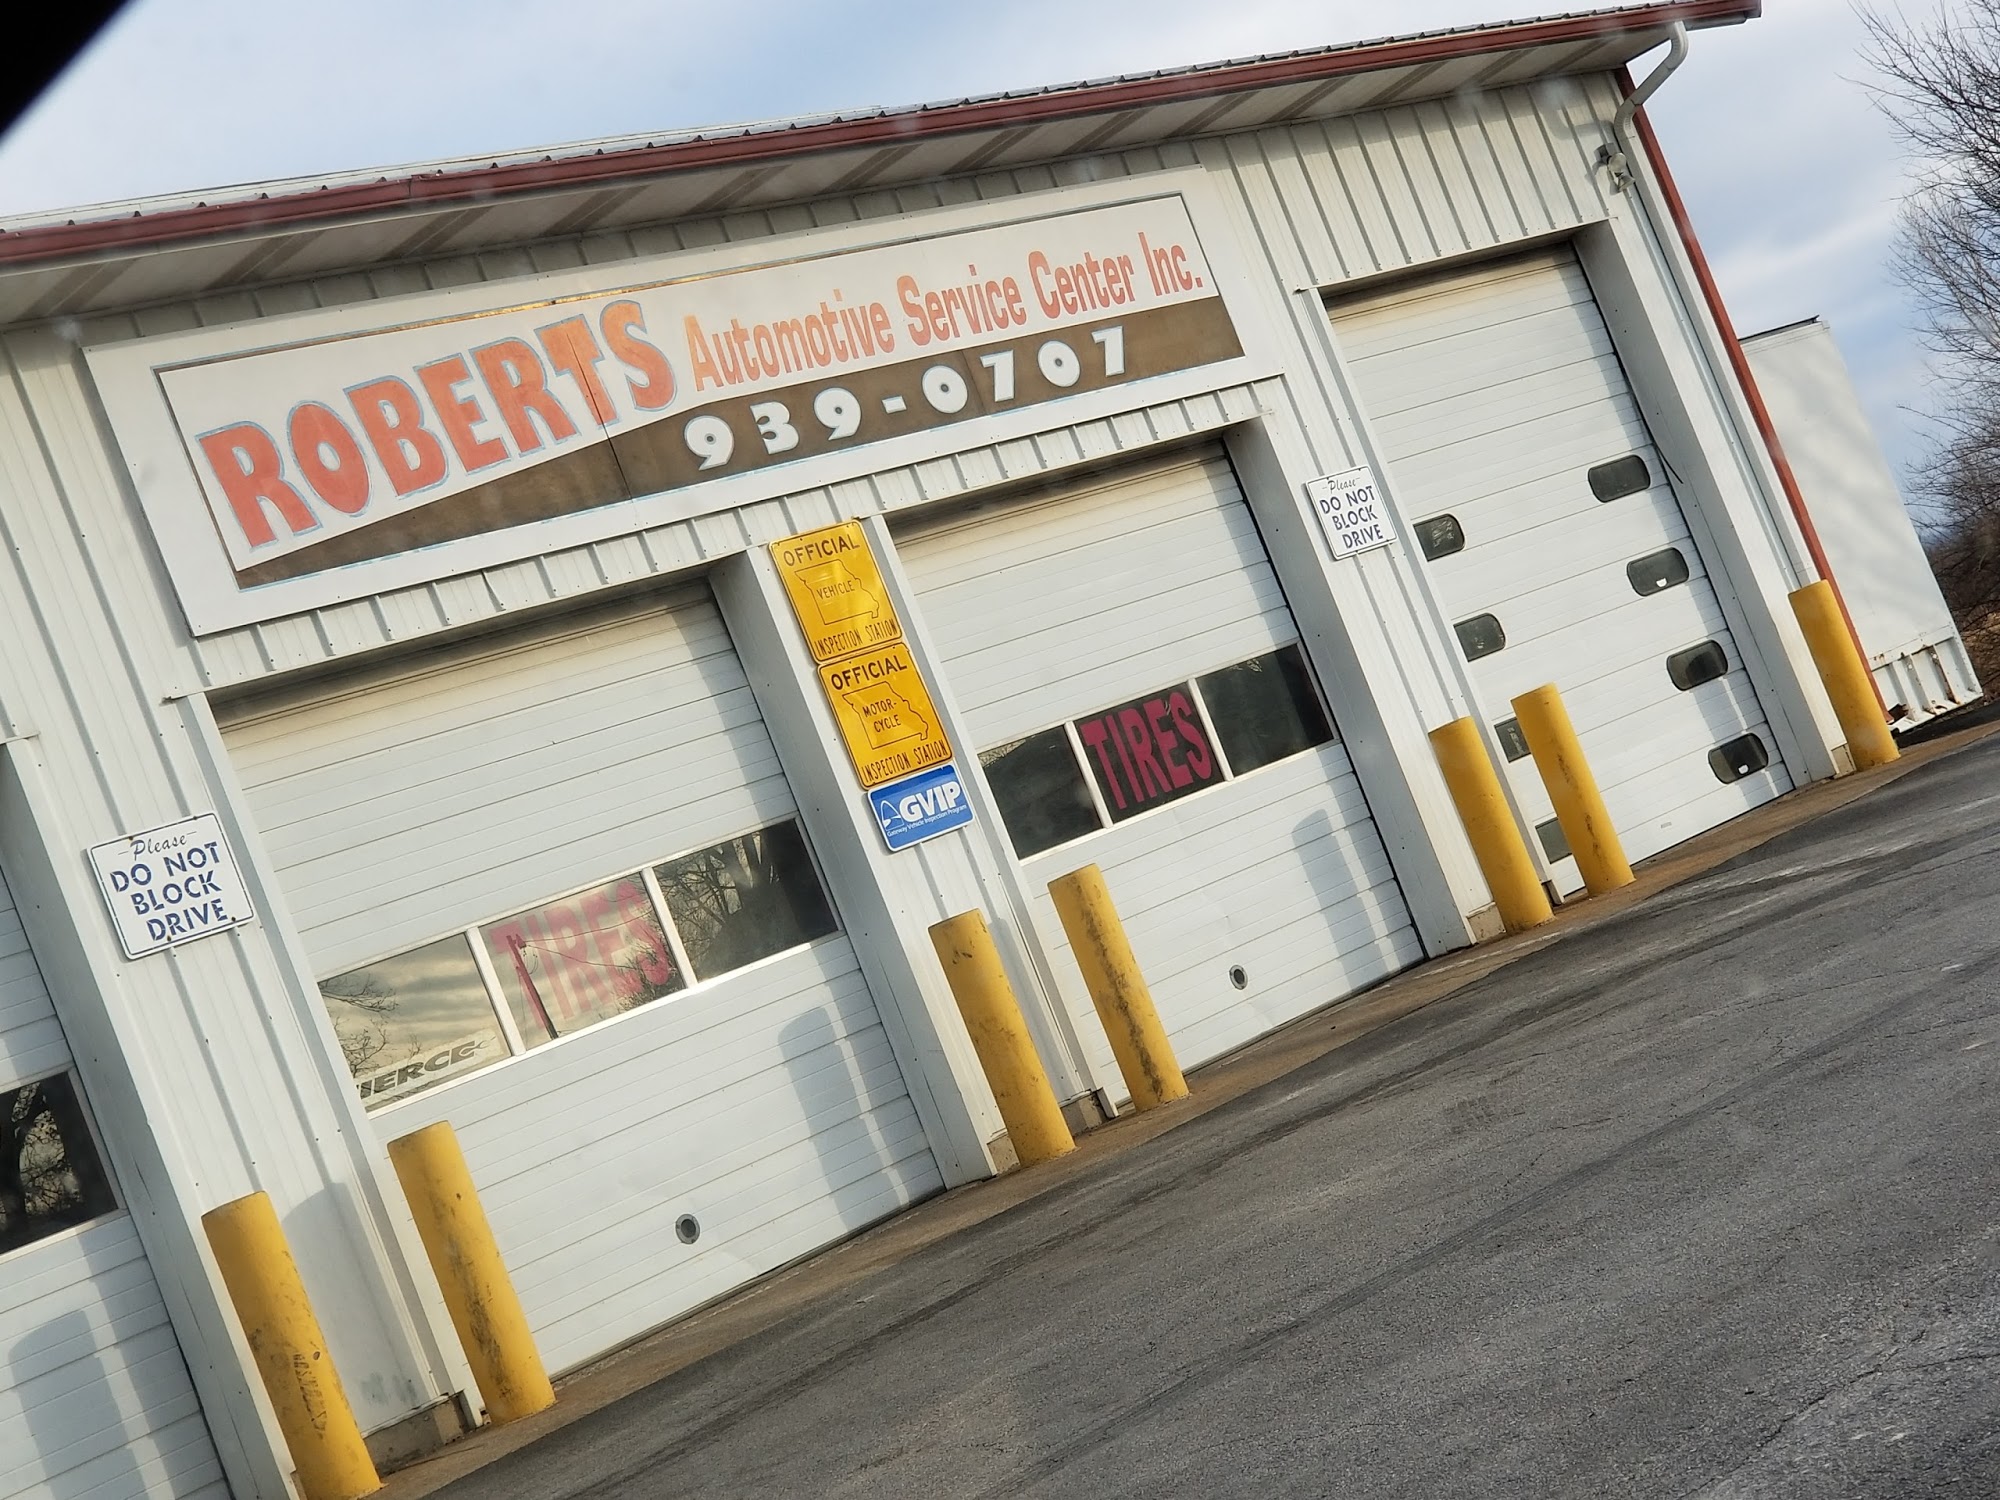 Robert's Automotive Service Center, Inc.